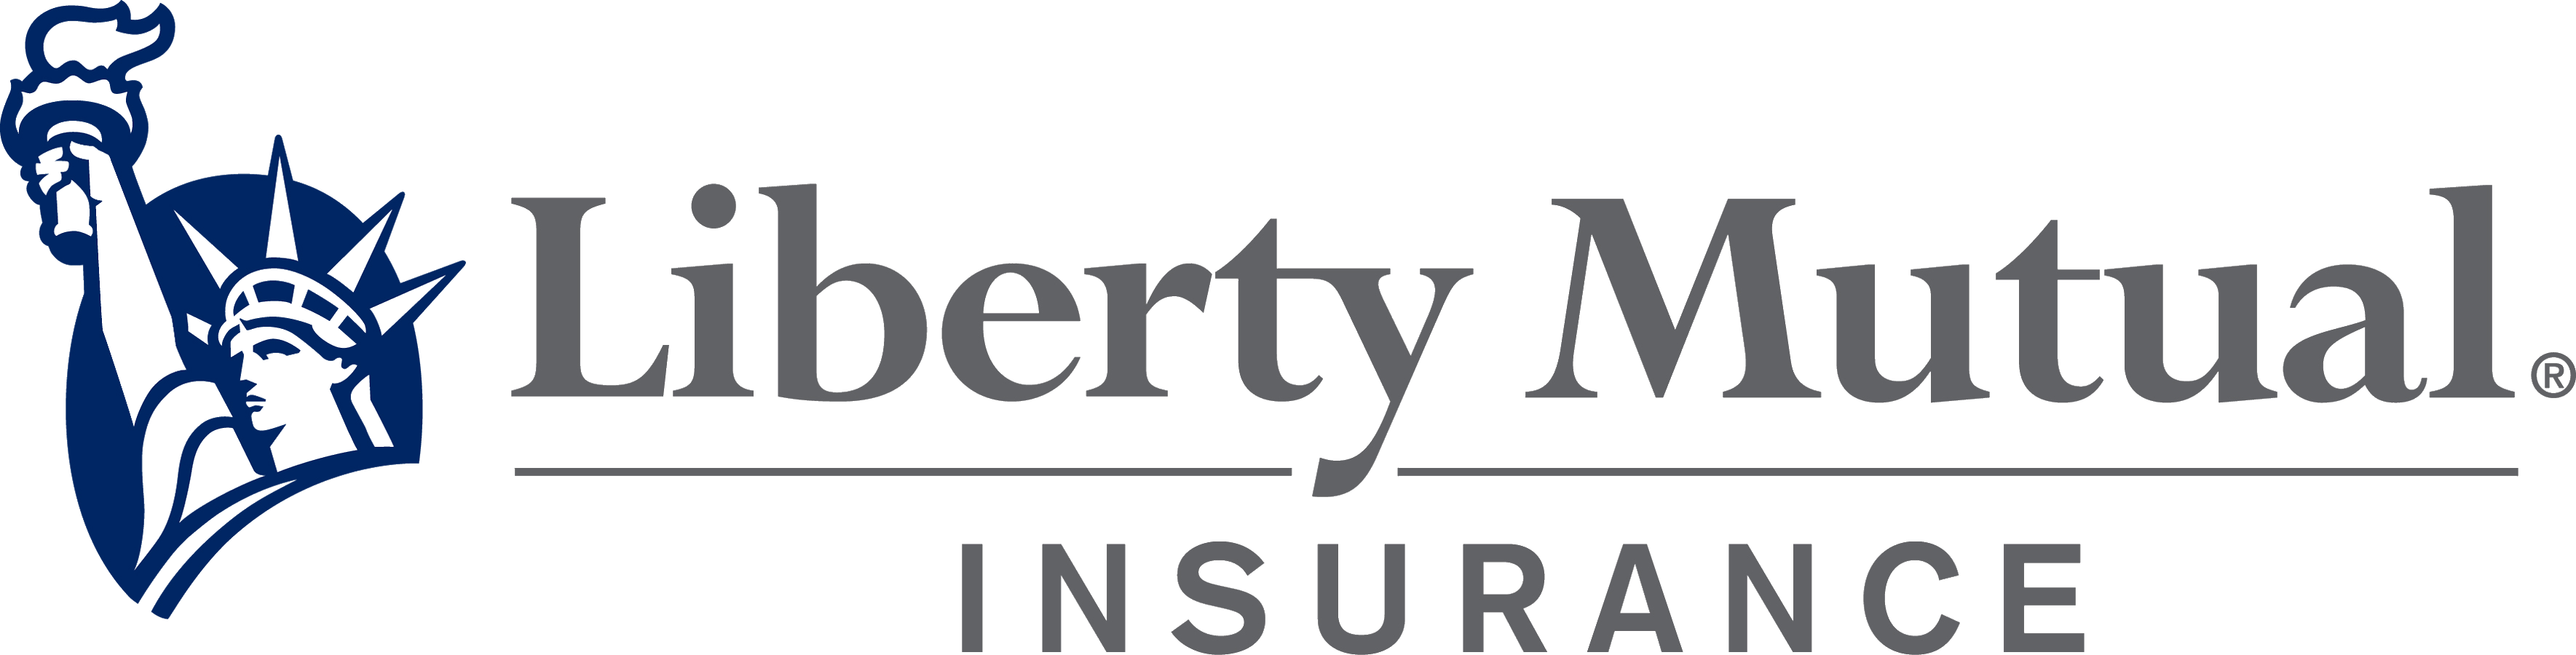 Liberty Mutual Insurance 6th Annual Strategic Internal Communications Conference | San Francisco 